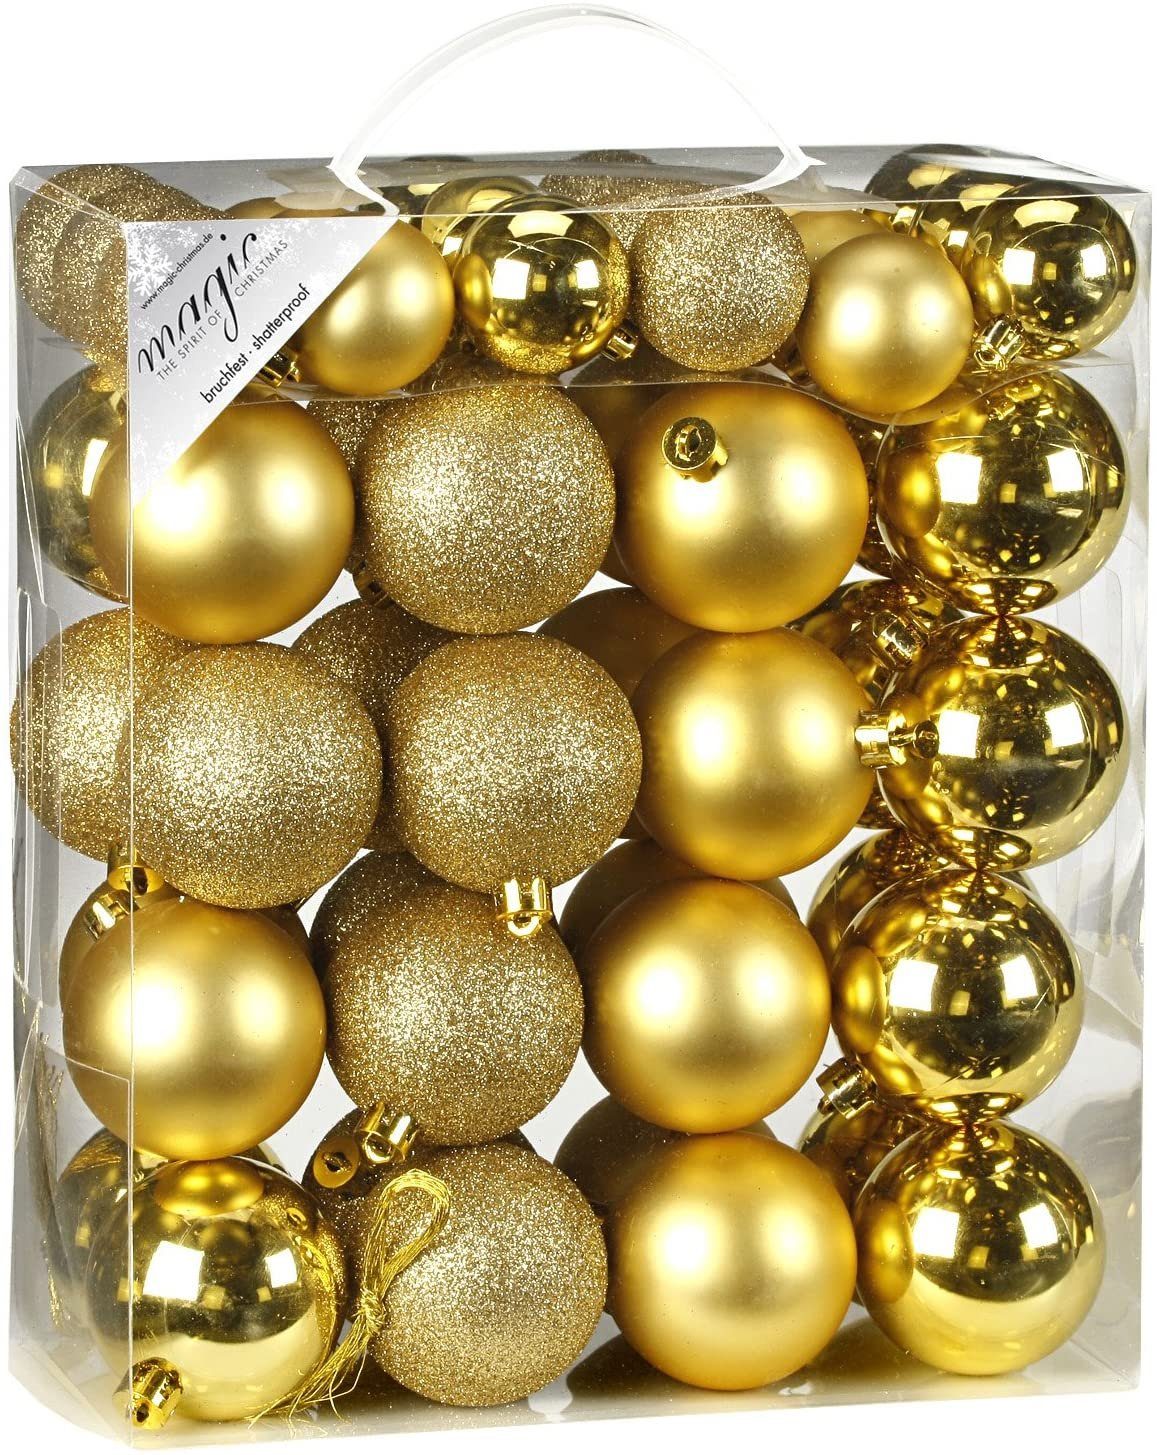 INGE-GLAS® Christbaumschmuck Inge's Weihnachtskugel 50 4-6 Stück Kunststoff, Gold, cm Weihnachtsdekoration, Baumdekoration, Baumschmuck, Kugel-Set